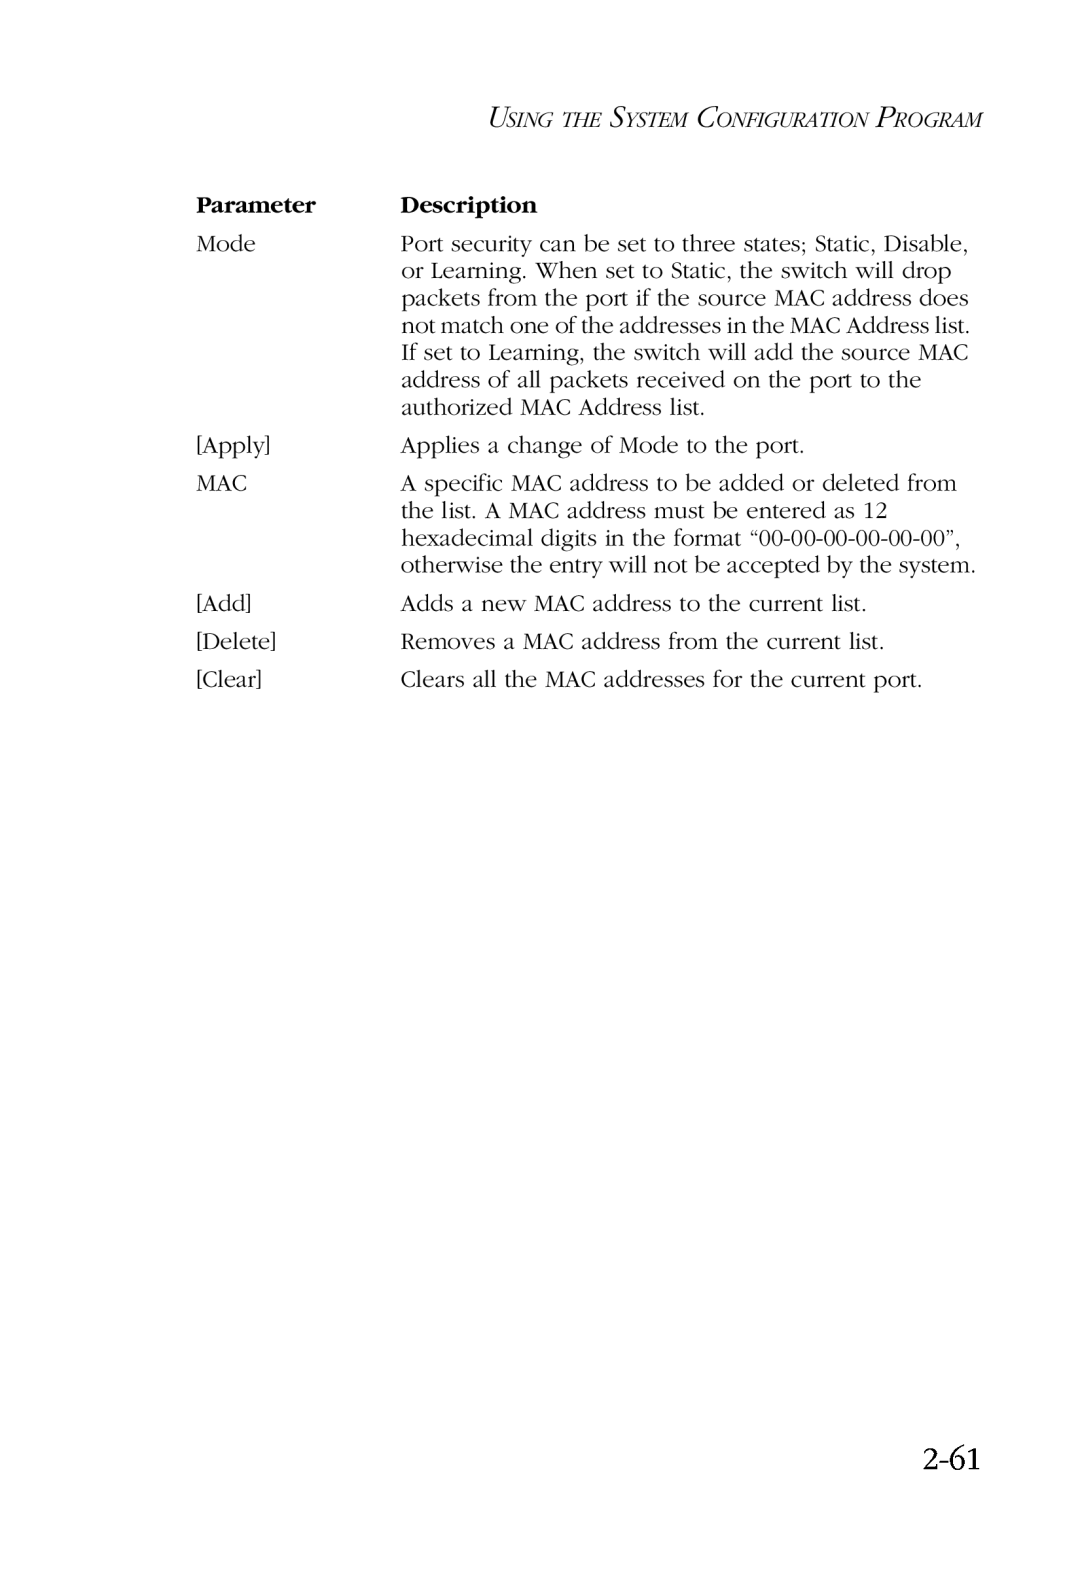 SMC Networks SMC6924VF manual 2-61, Parameter, Description 